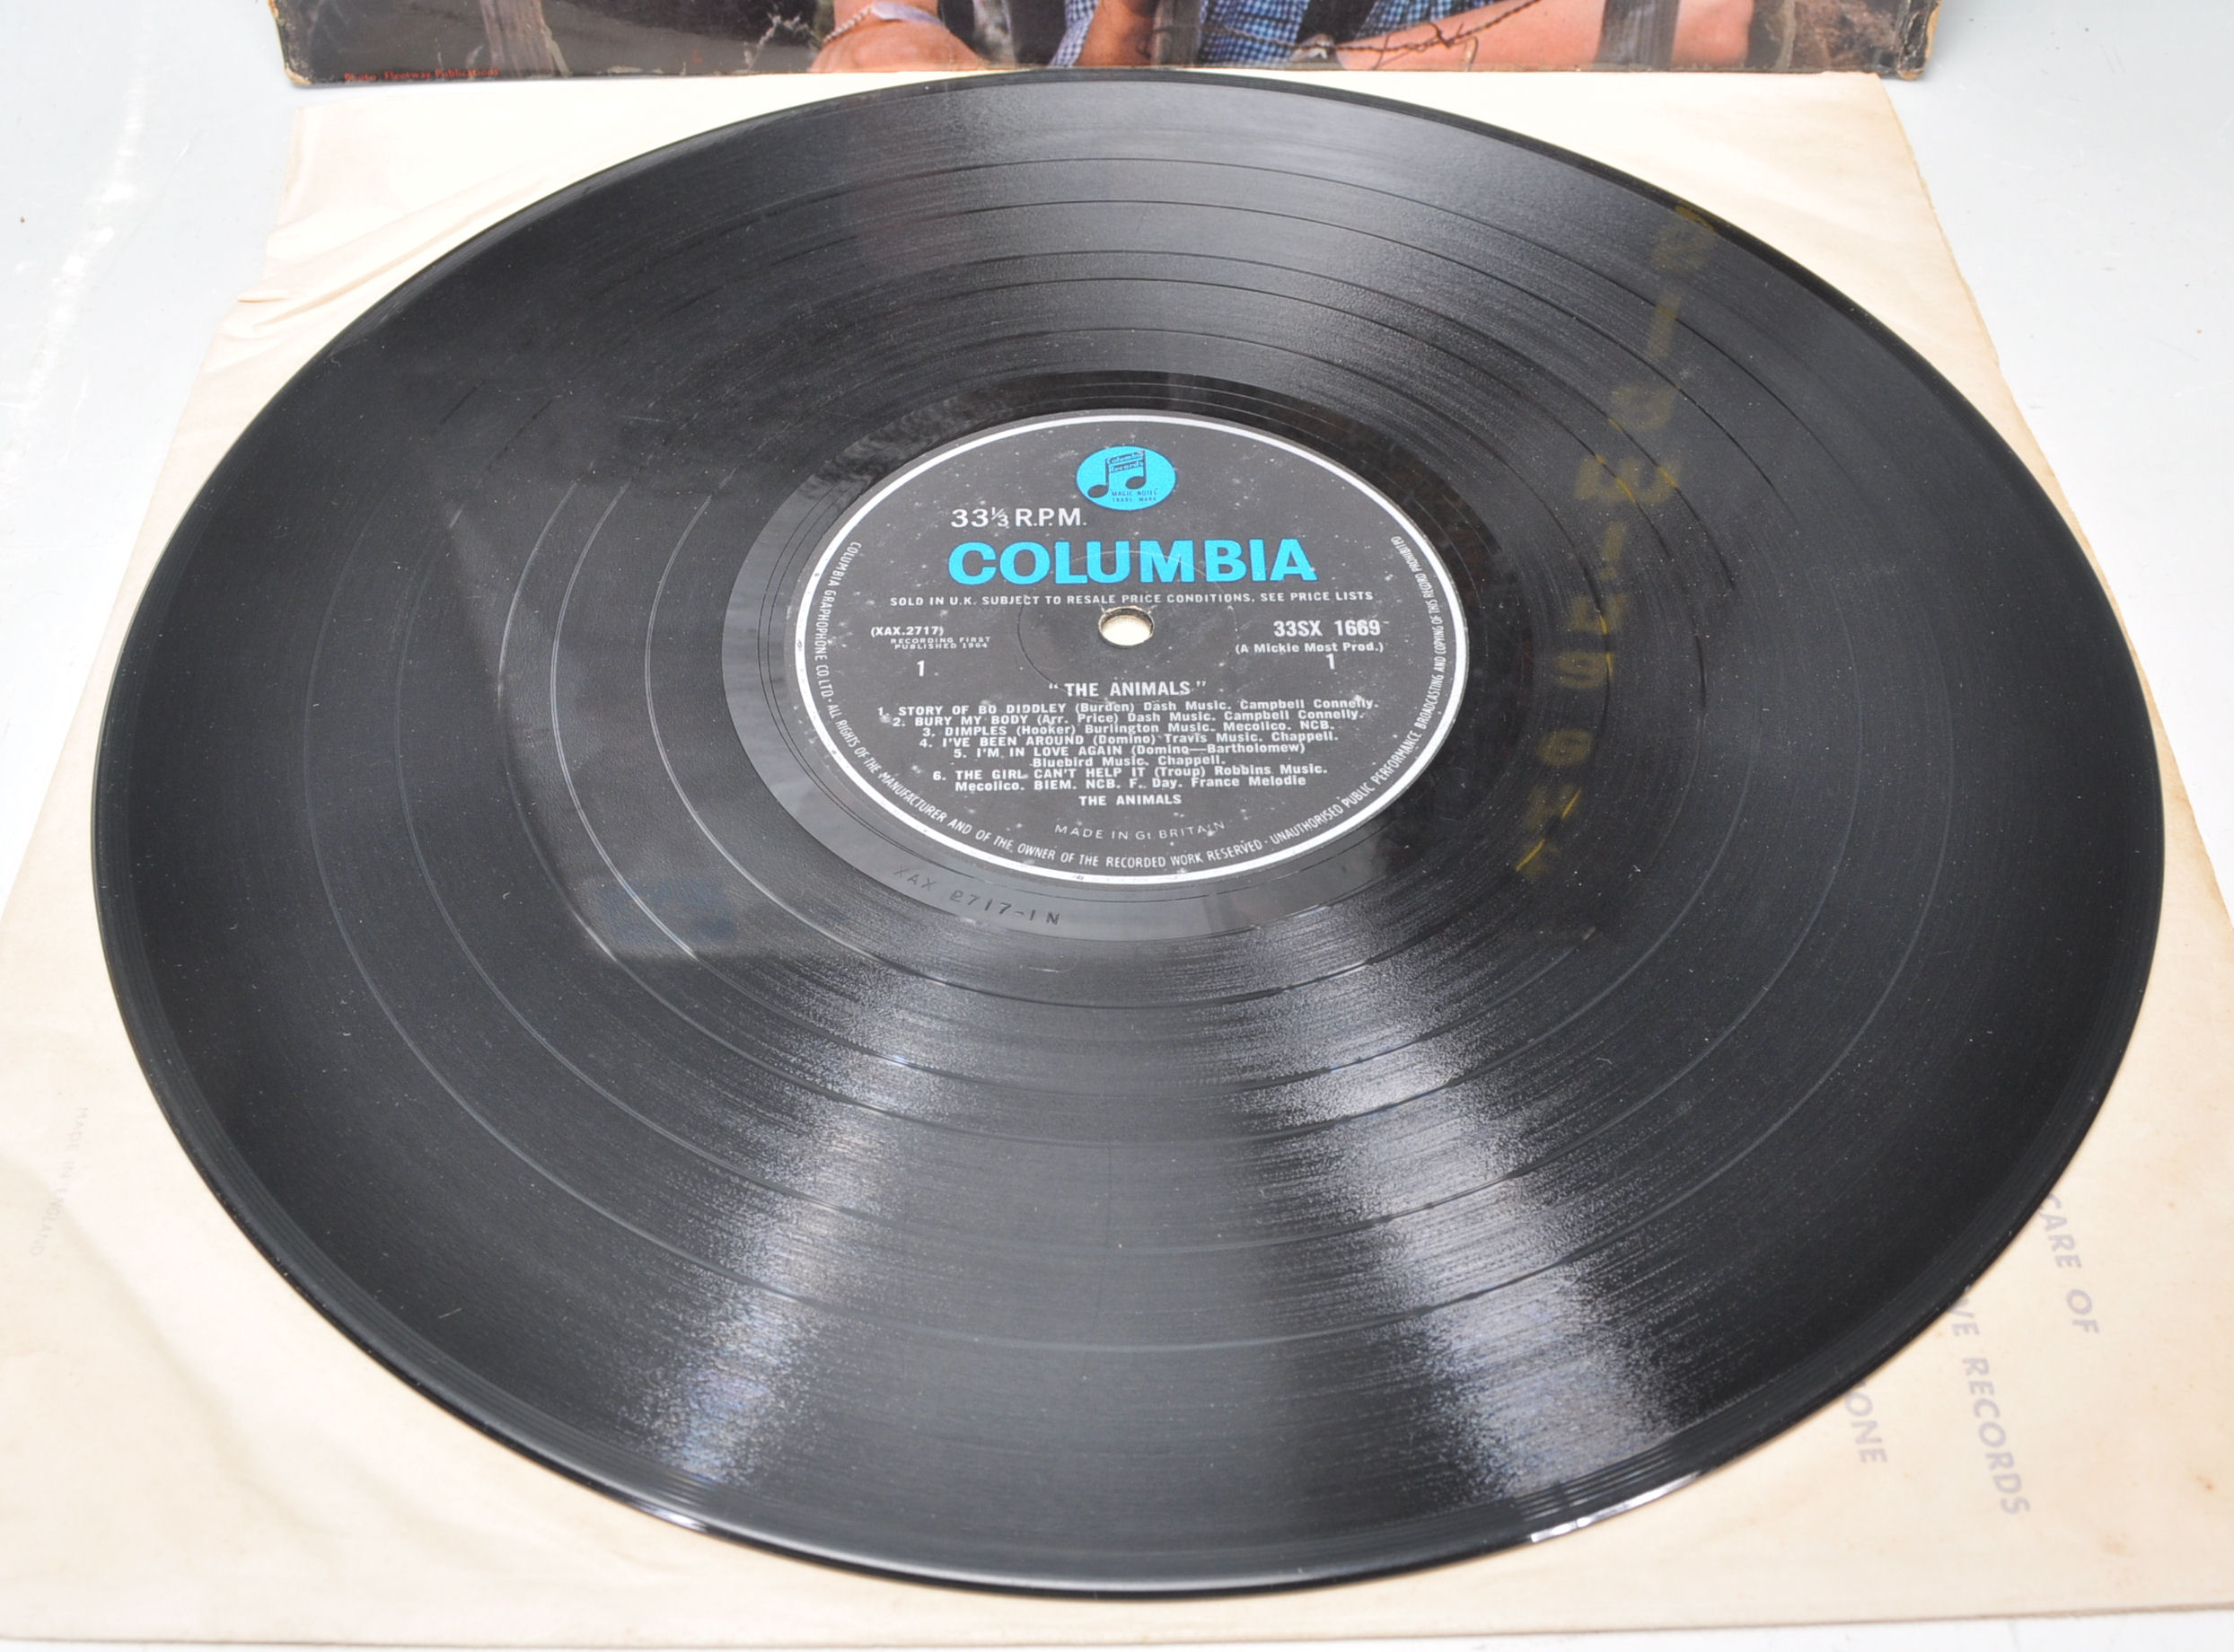 A vinyl long play LP record album by The Animals – "The Animals"  – Original Columbia 1st U.K. Press - Image 2 of 4